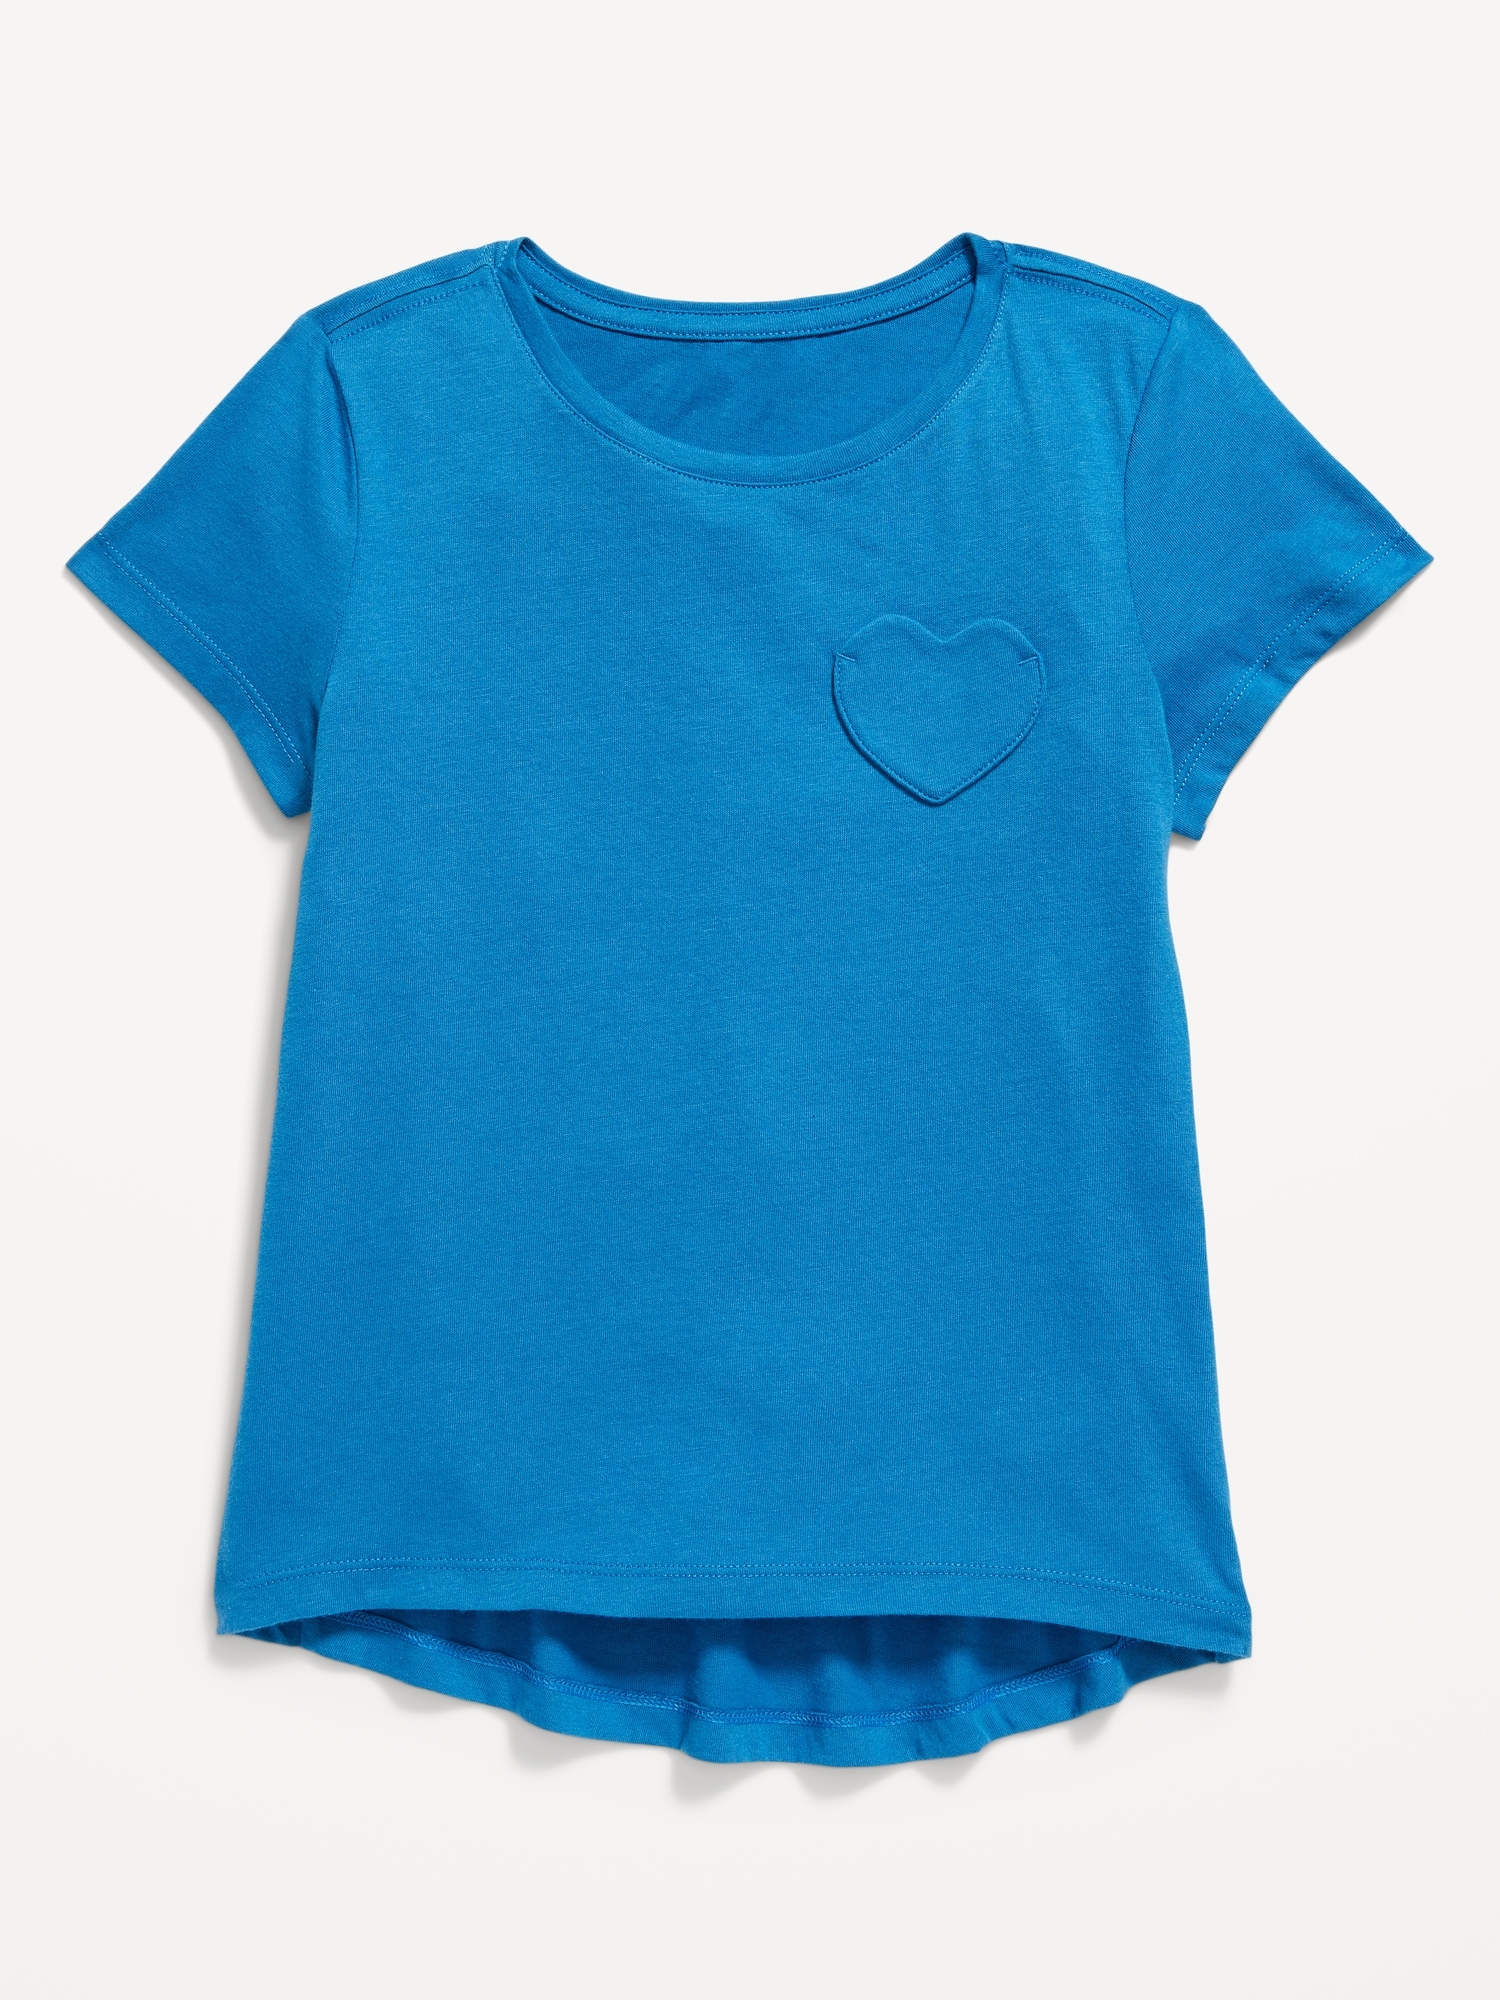 Old Navy Softest Short-Sleeve Heart-Pocket T-Shirt for Girls blue. 1